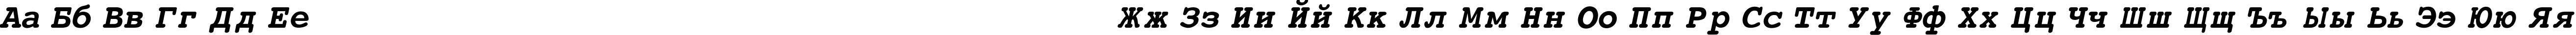 Пример написания русского алфавита шрифтом Courier-Bold-Italic